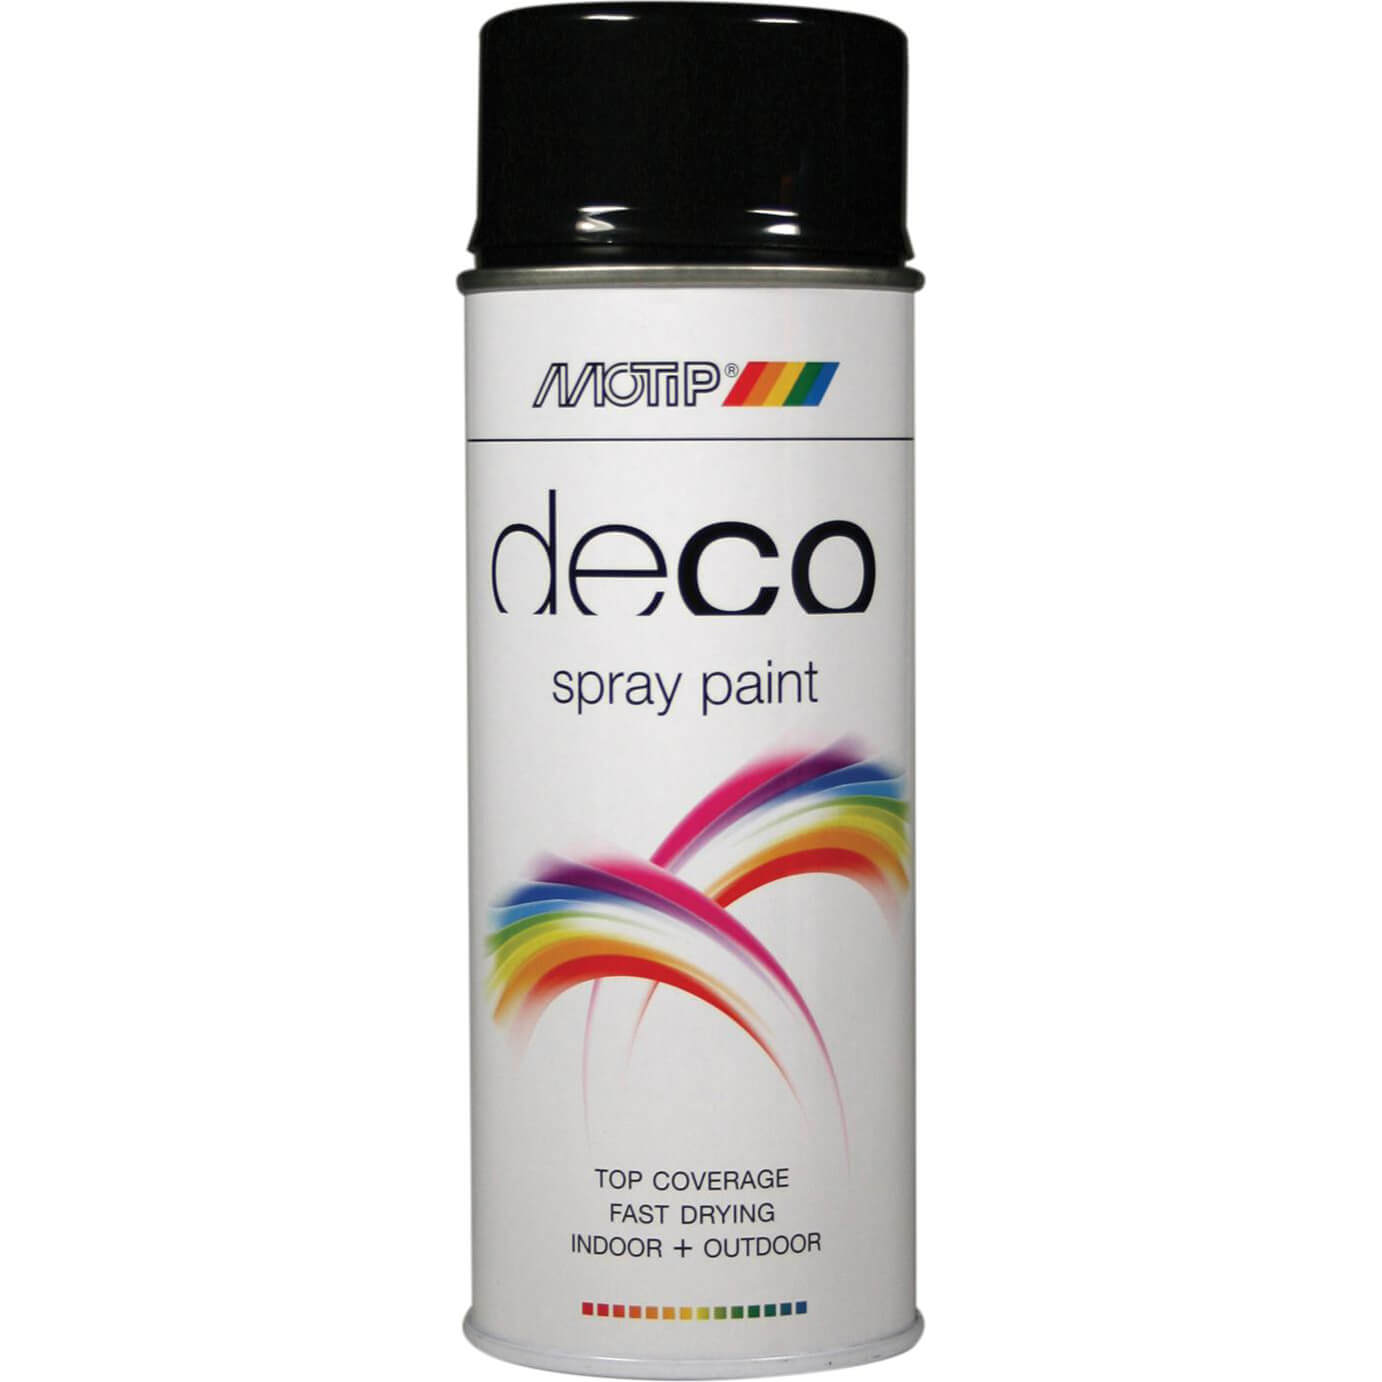 Motip Deco High Gloss RAL Spray Paint Deep Black 400ml